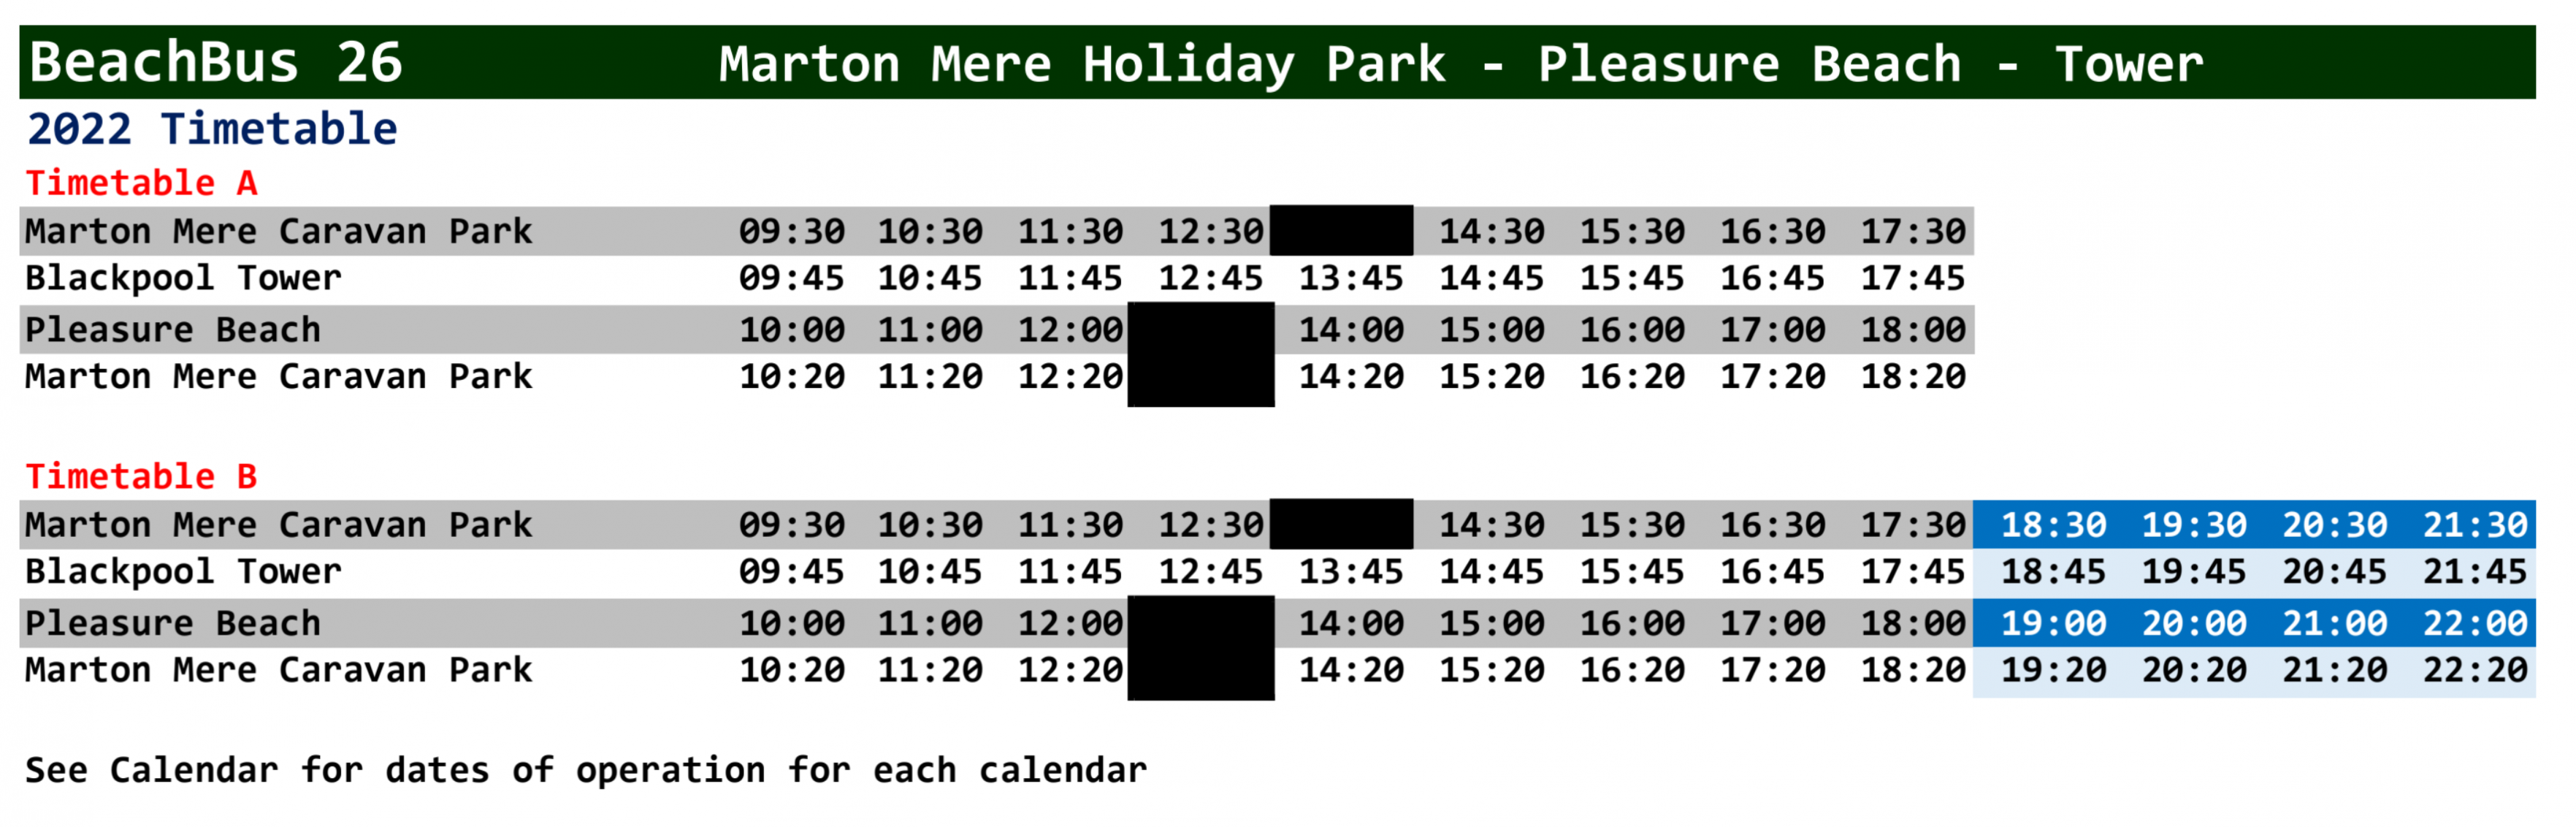 Beach Bus 26 Timetable